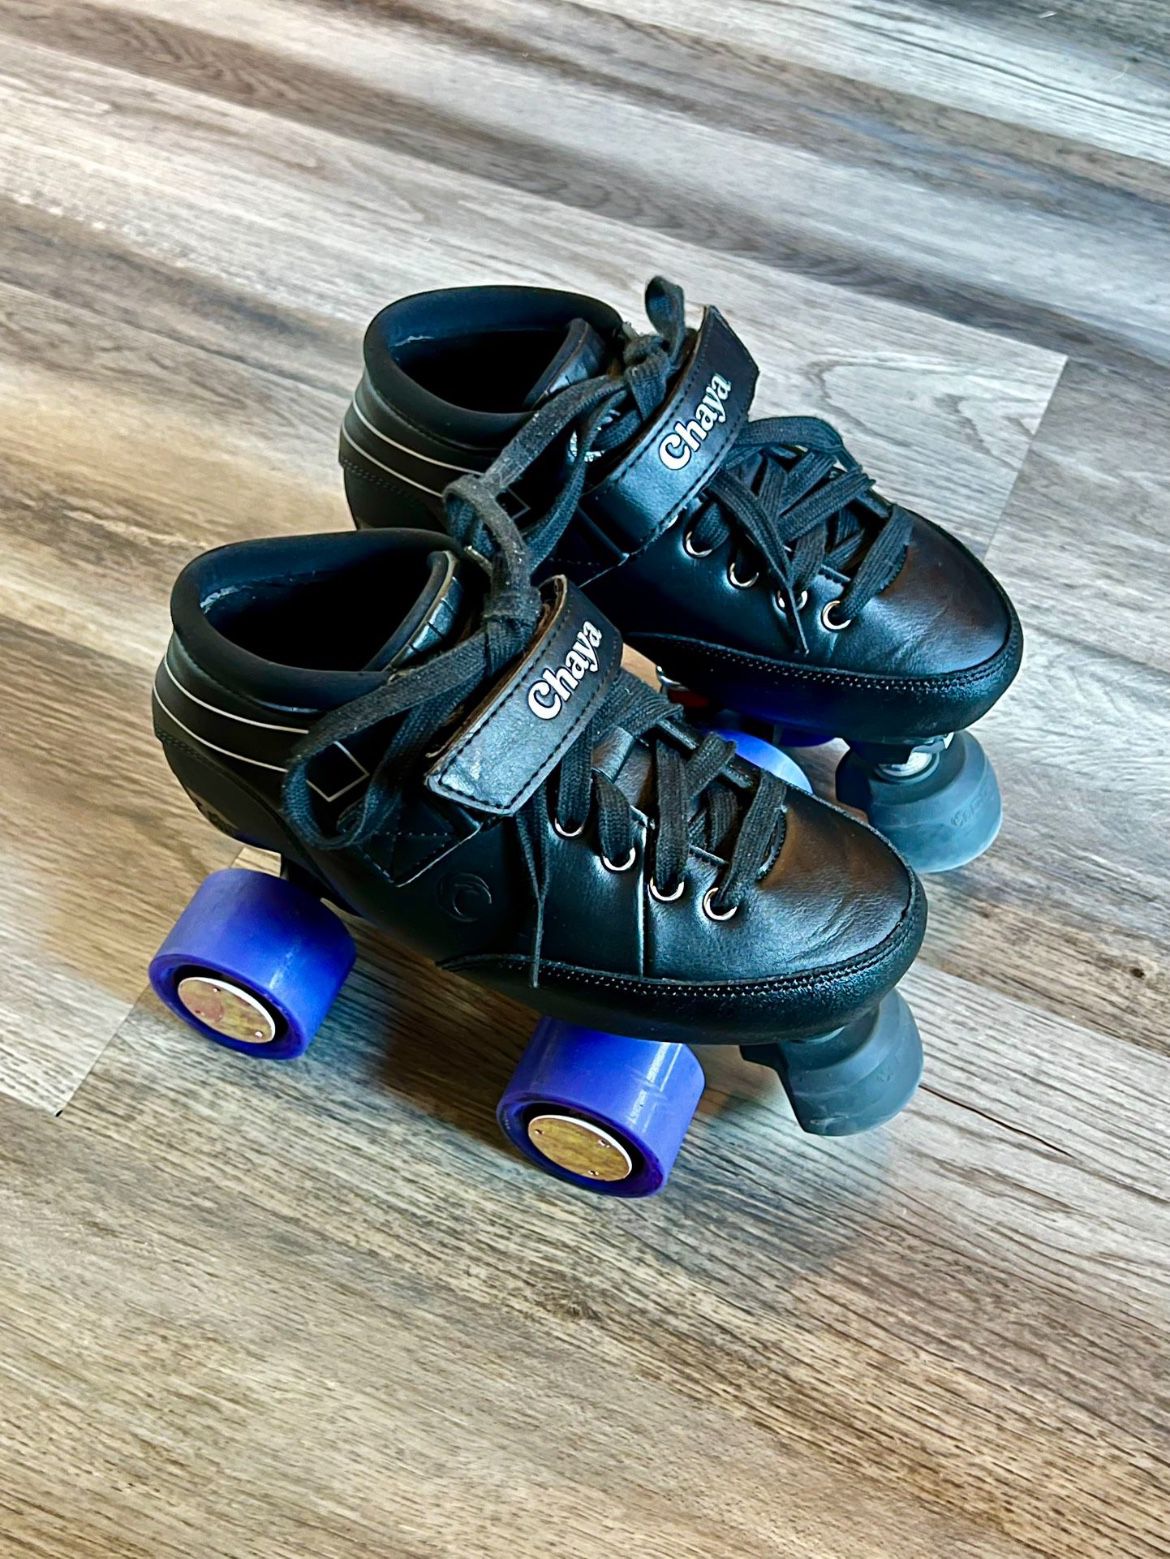 Chaya Jade Roller Skates *Like New*